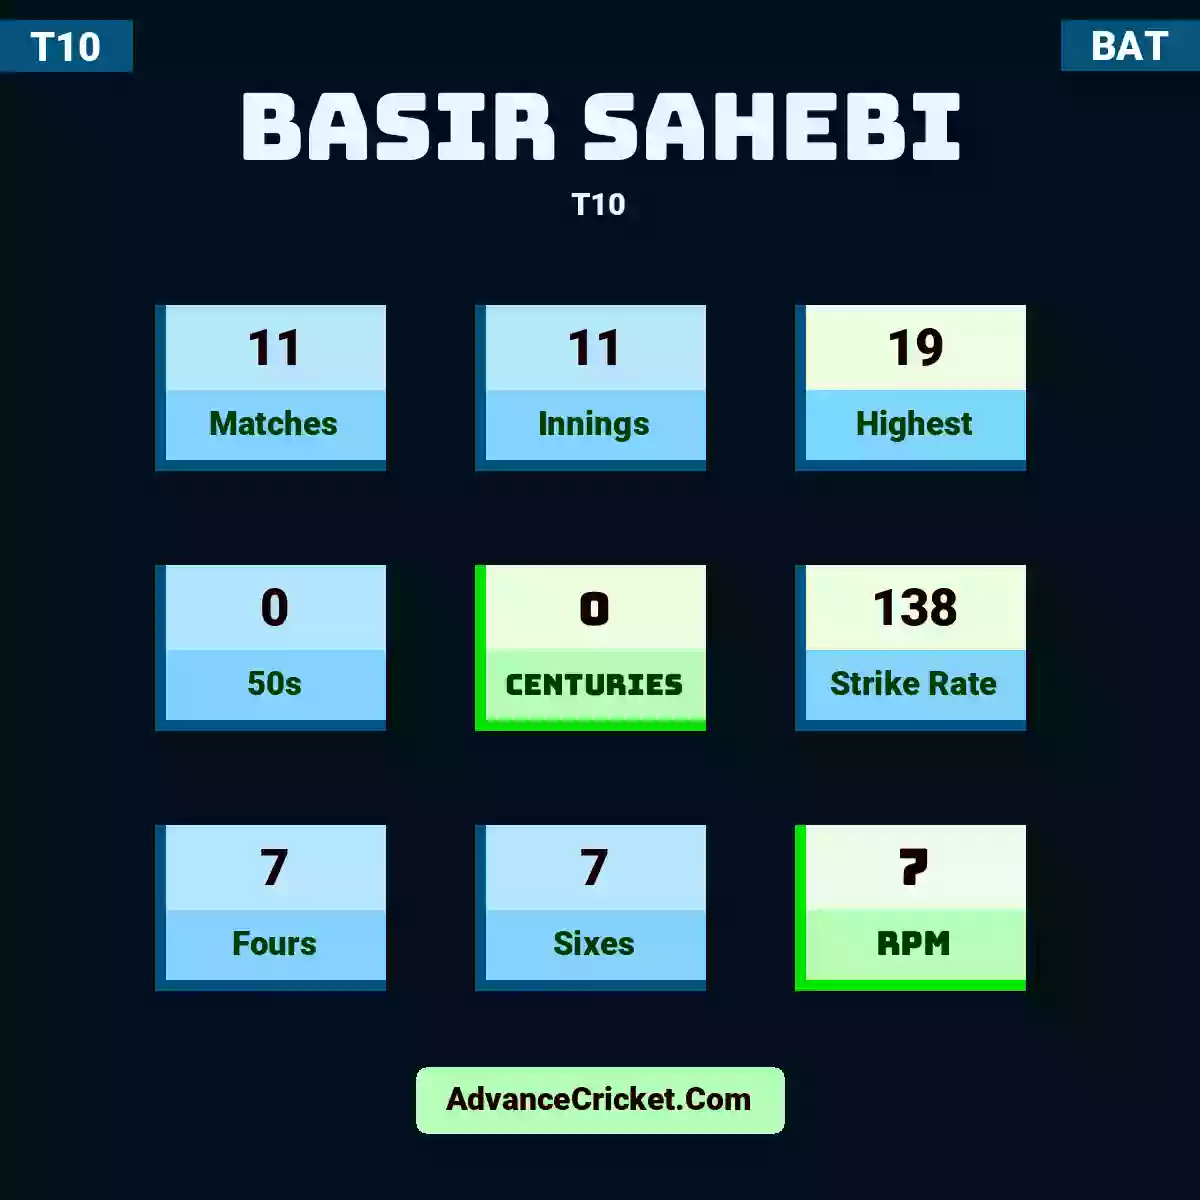 Basir Sahebi T10 , Basir Sahebi played 11 matches, scored 19 runs as highest, 0 half-centuries, and 0 centuries, with a strike rate of 138. B.Sahebi hit 7 fours and 7 sixes, with an RPM of 7.